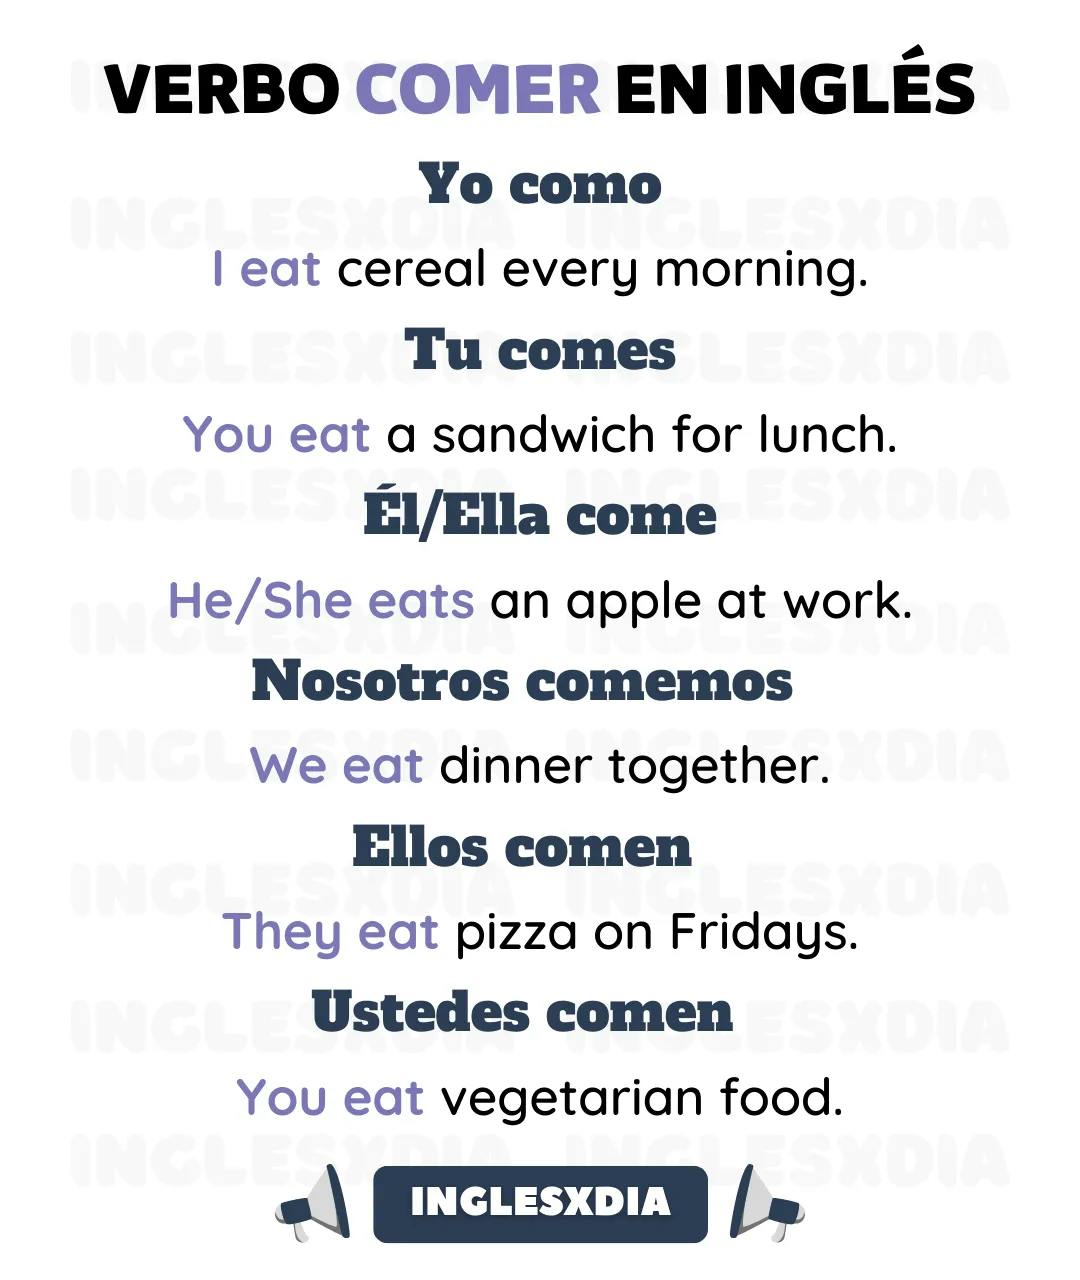 Curso de inglés en línea: Verbo comer en inglés